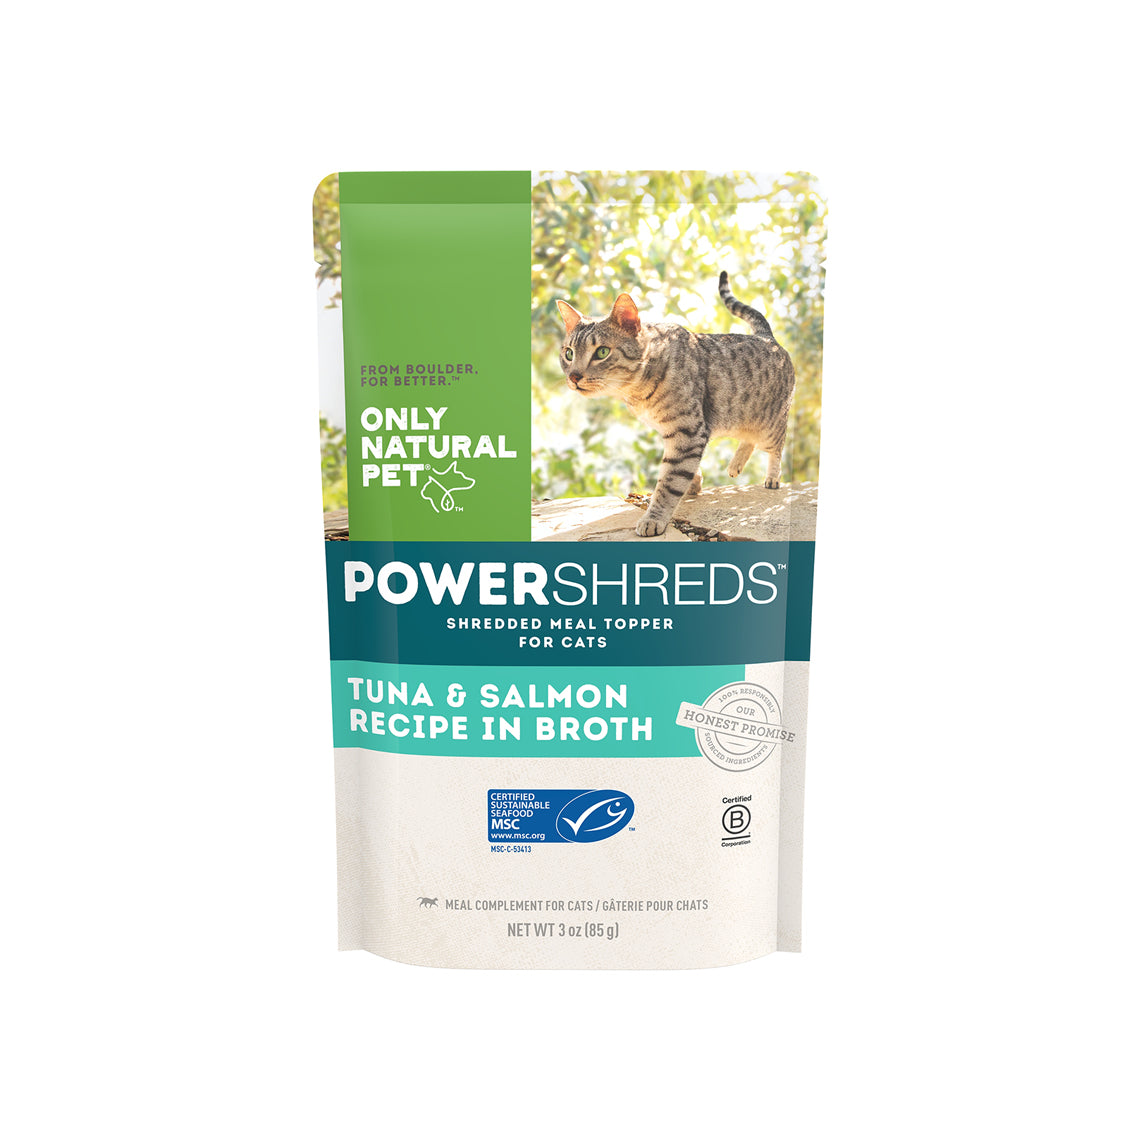 vores komme til syne Flock PowerShreds Tuna & Salmon Single Cat Food Topper | Only Natural Pet